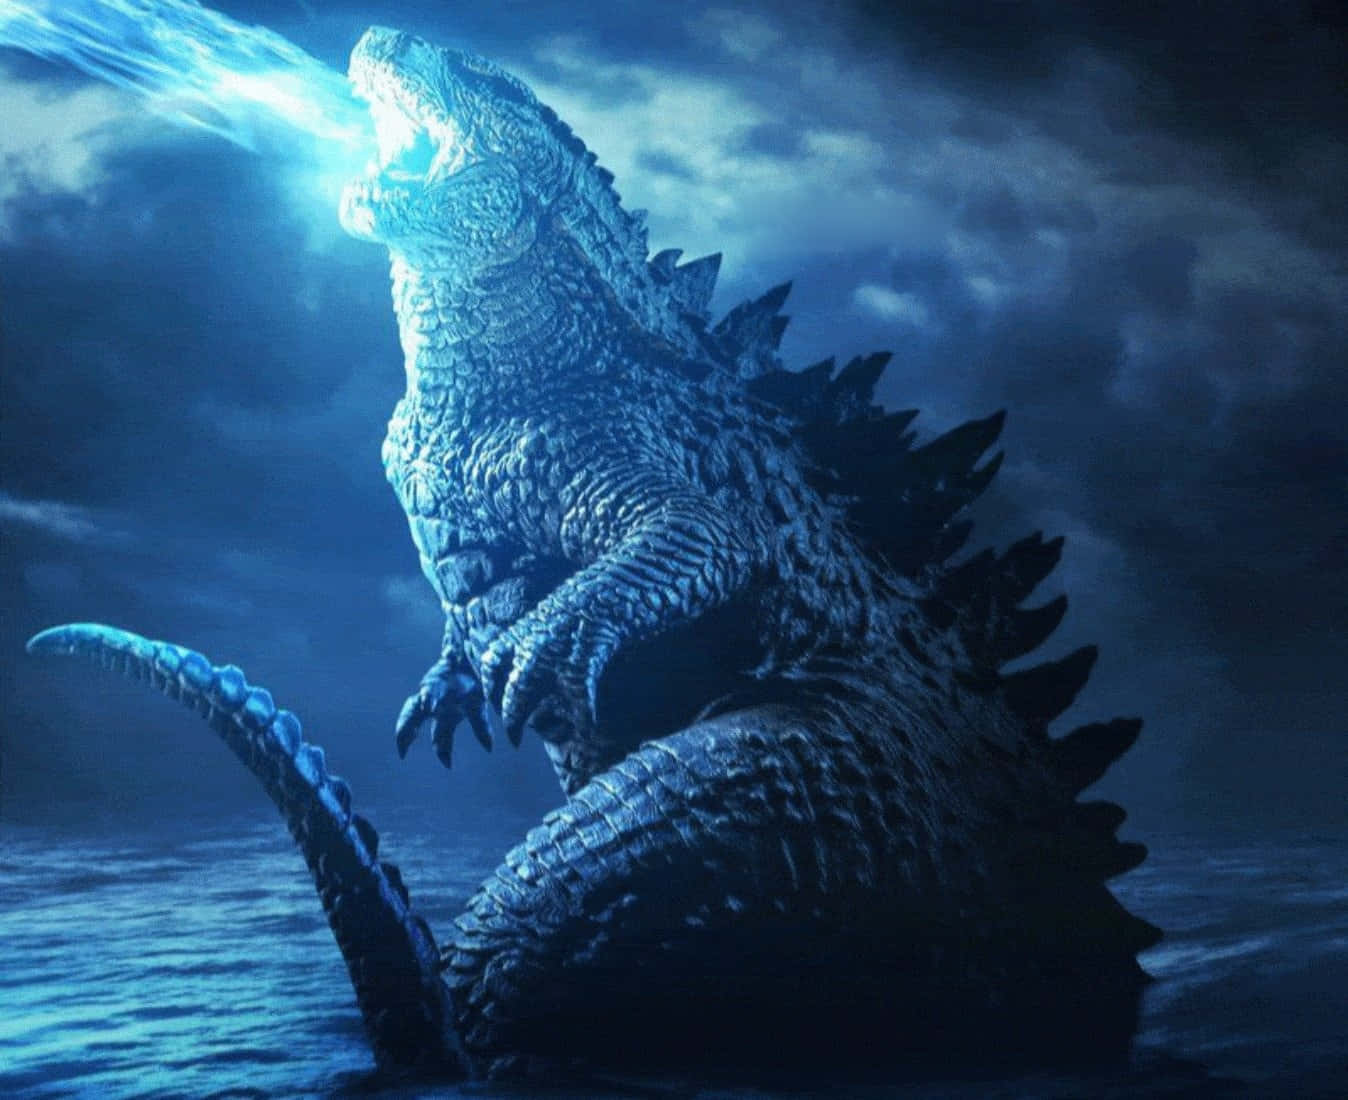 Godzilla Neon Blue Laser Beam In The Ocean Picture